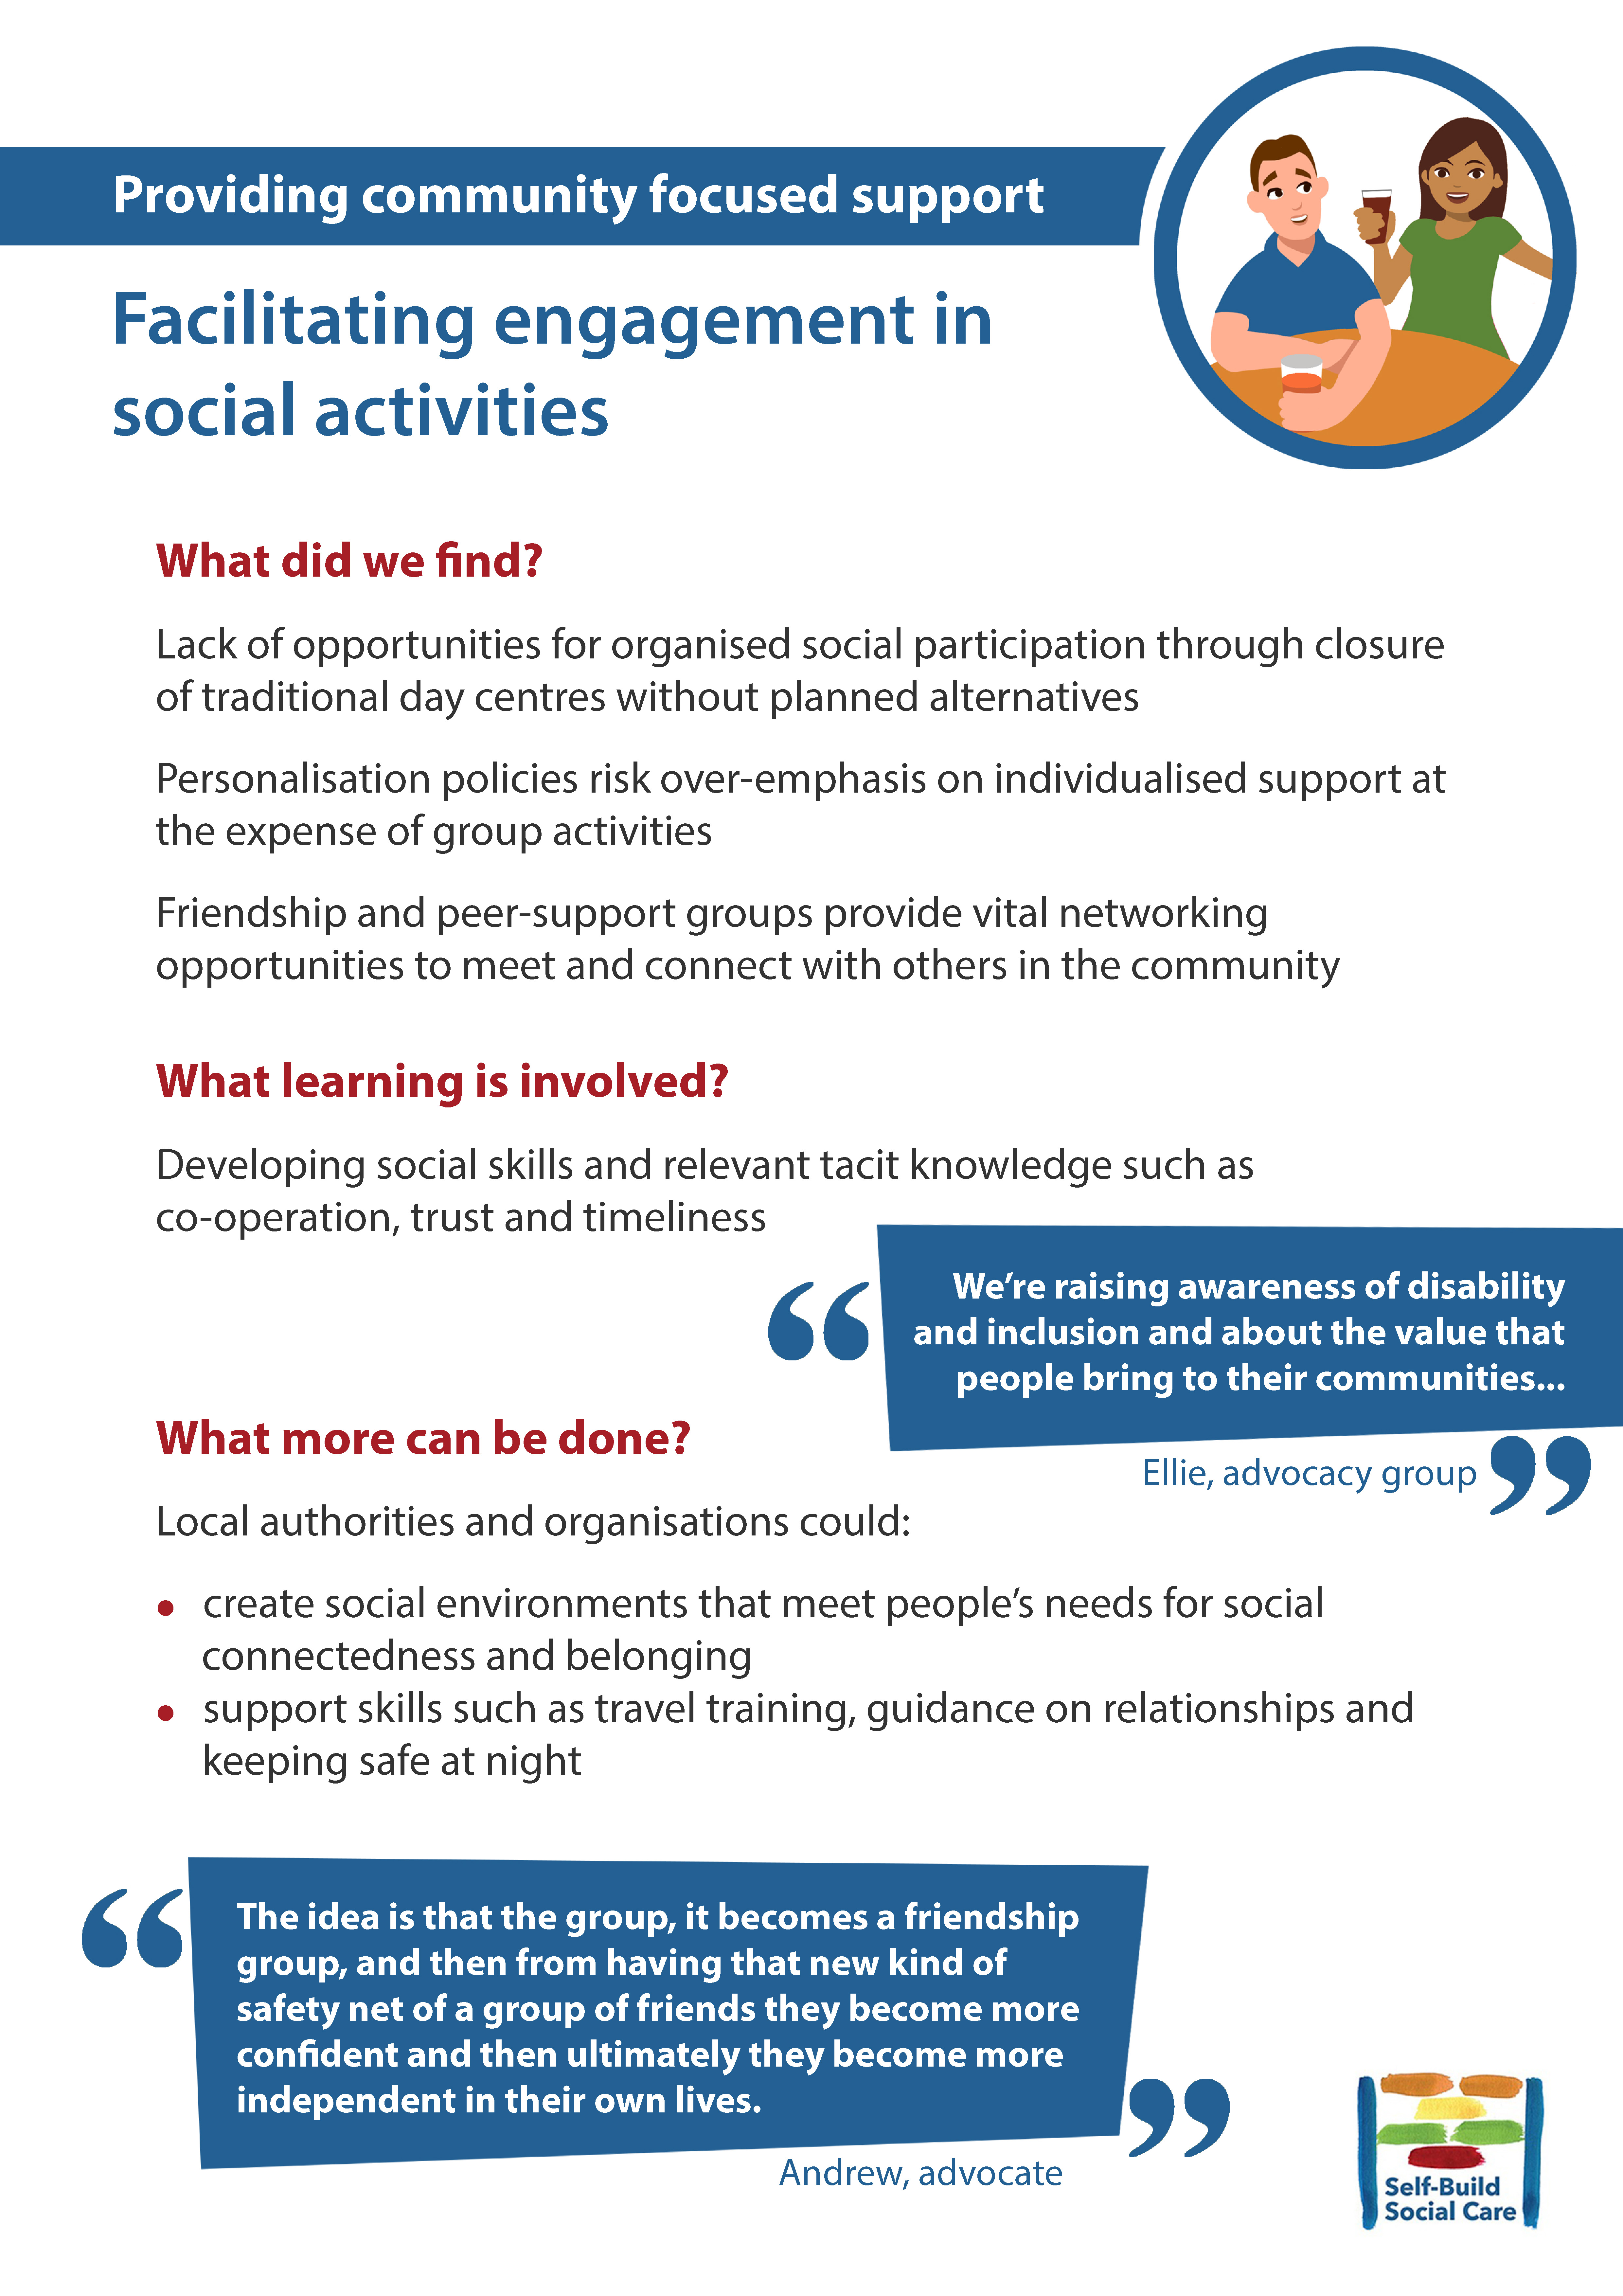 Facilitating engagement in social activities image